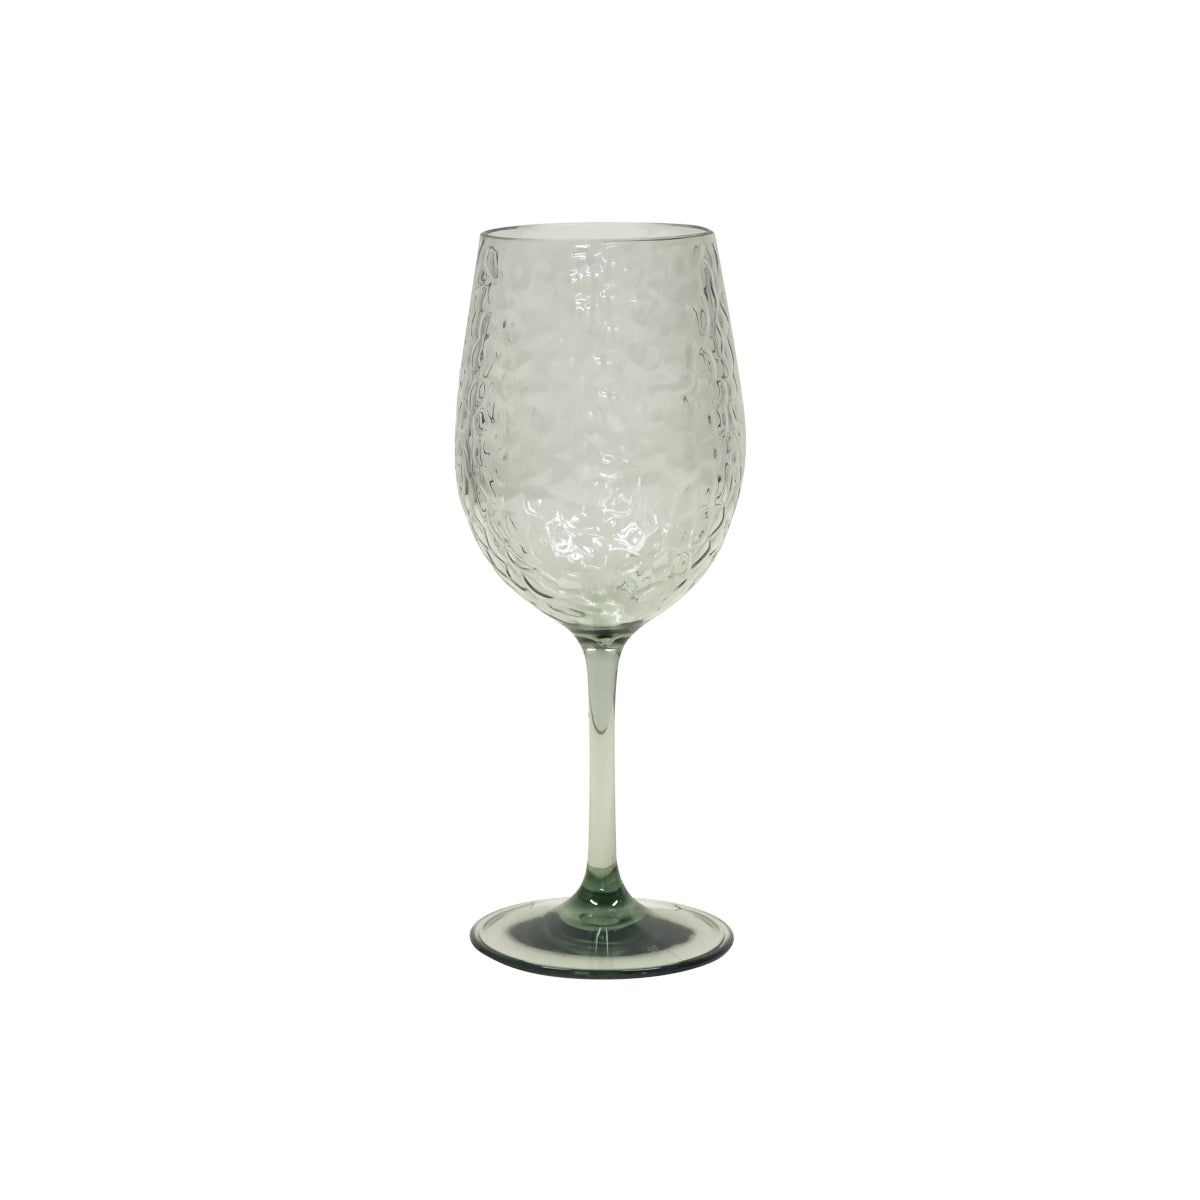 Saltwater Wine Glass Jade 350ml | Minimax